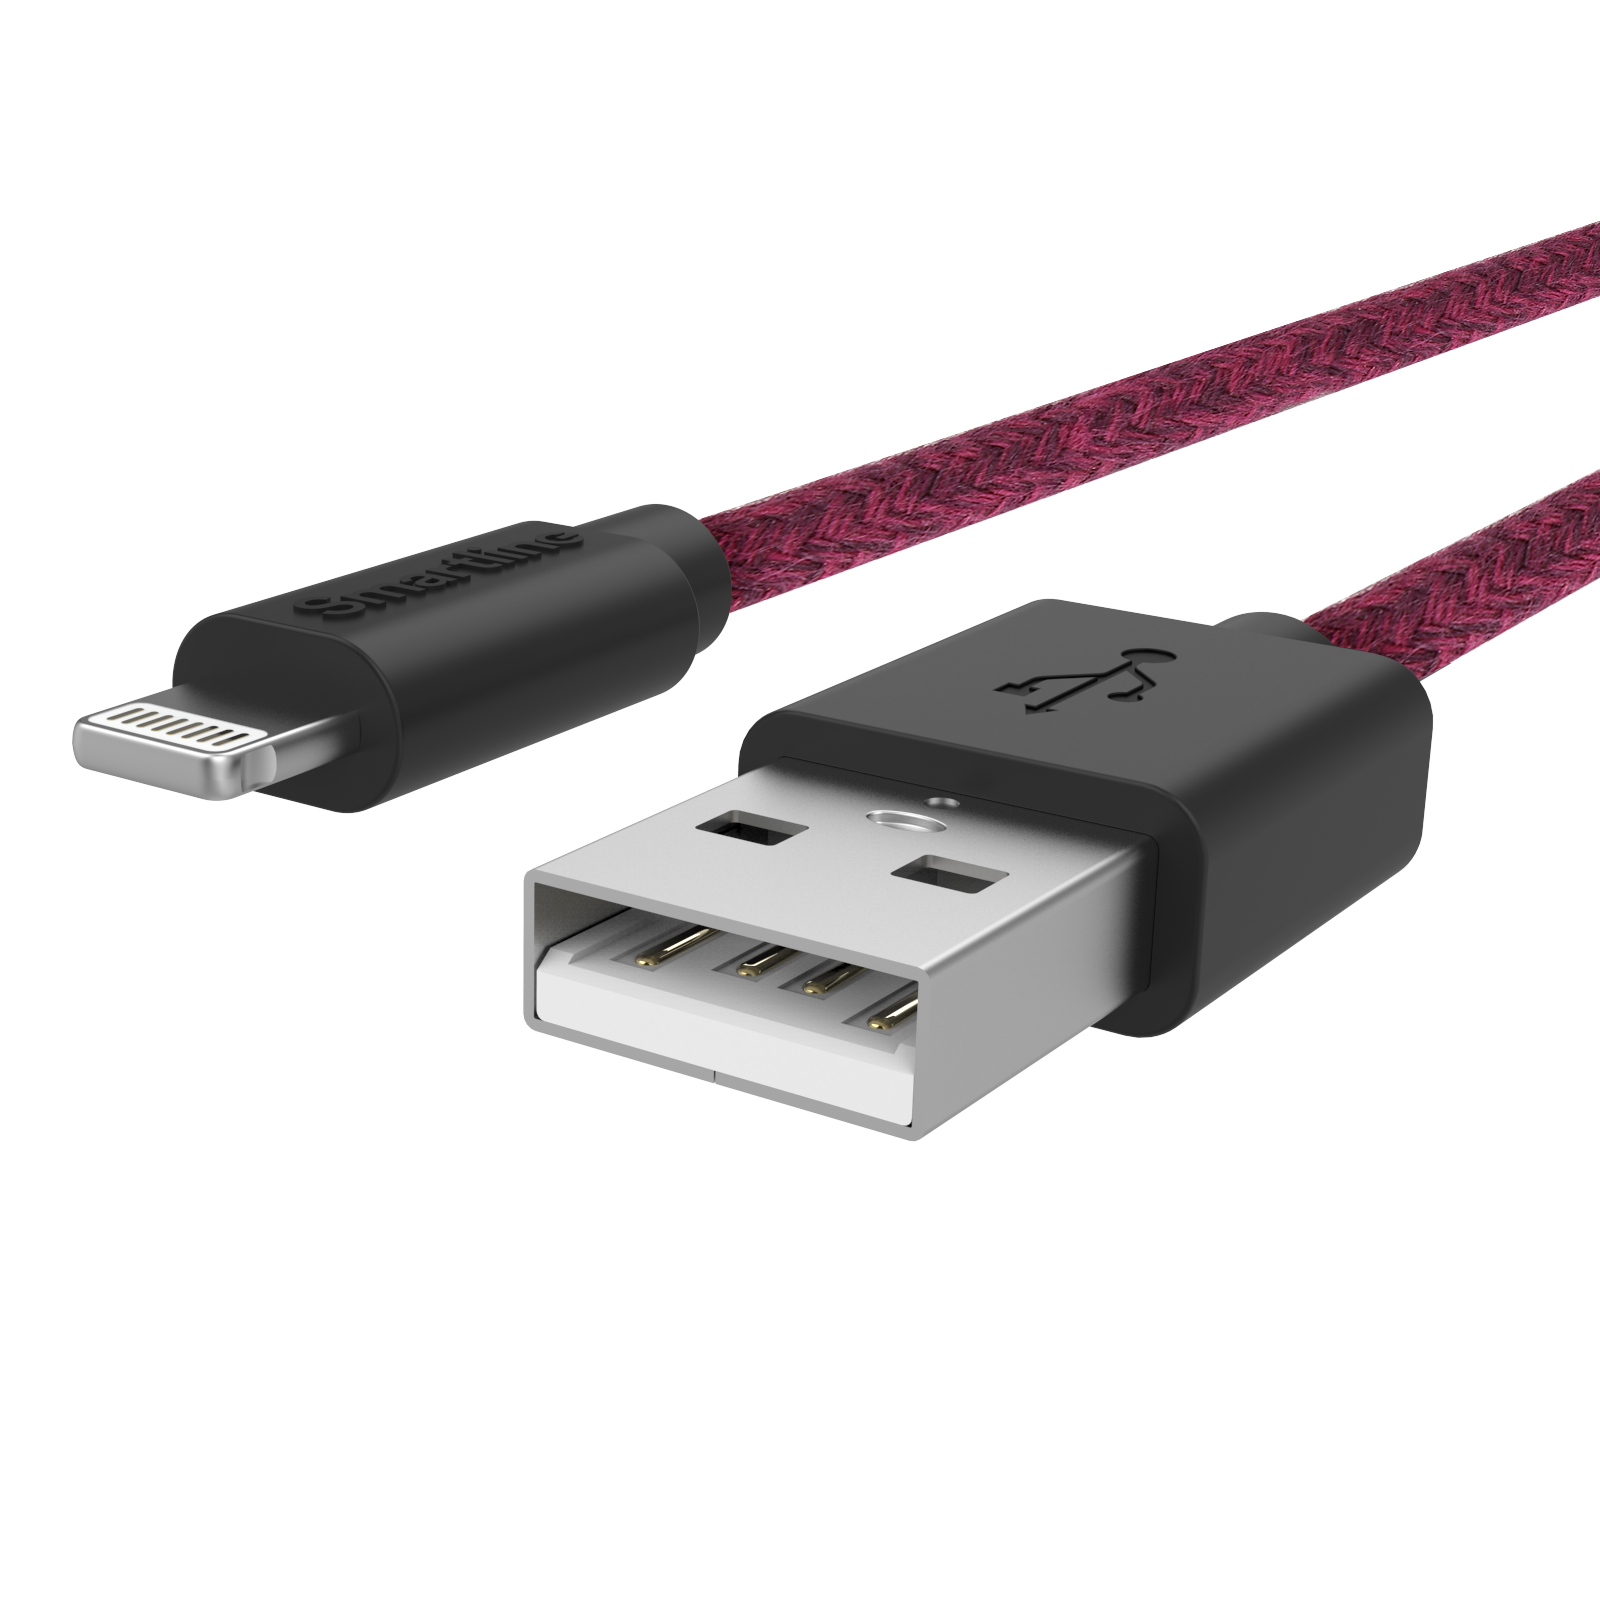 Fuzzy USB Cable Lightning 2m Purple